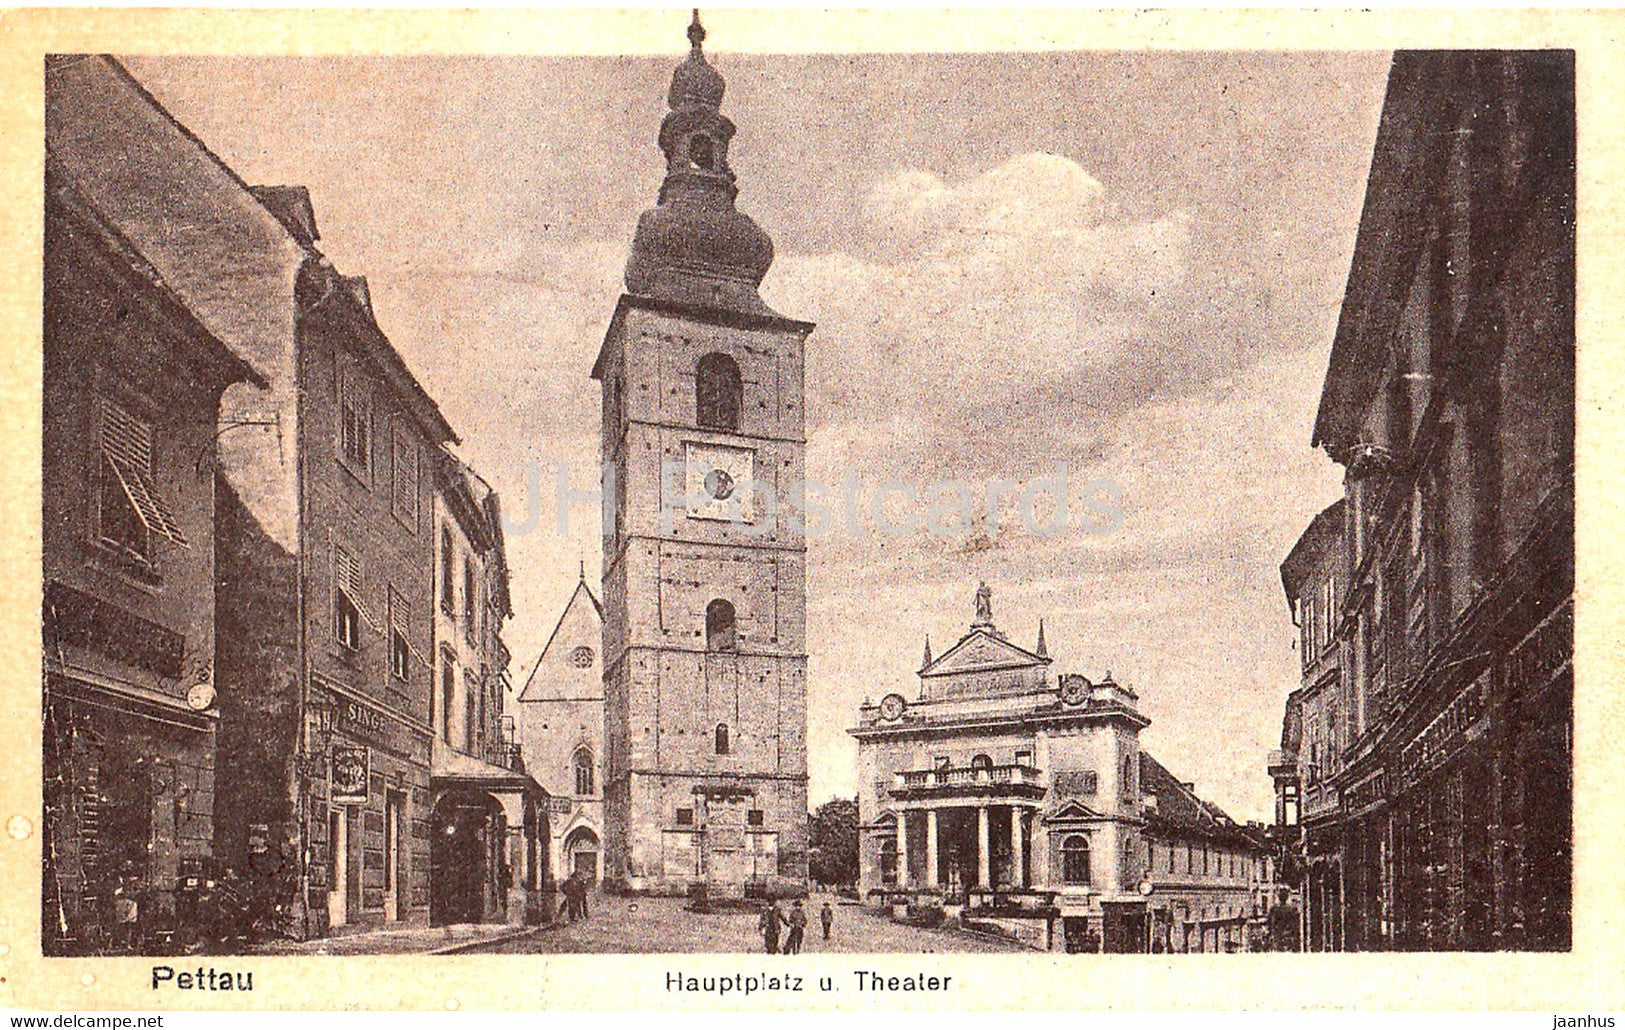 Pettau - Ptuj - Hauptplatz u Theater - theatre - old postcard - 1918 - Slovenia - used - JH Postcards